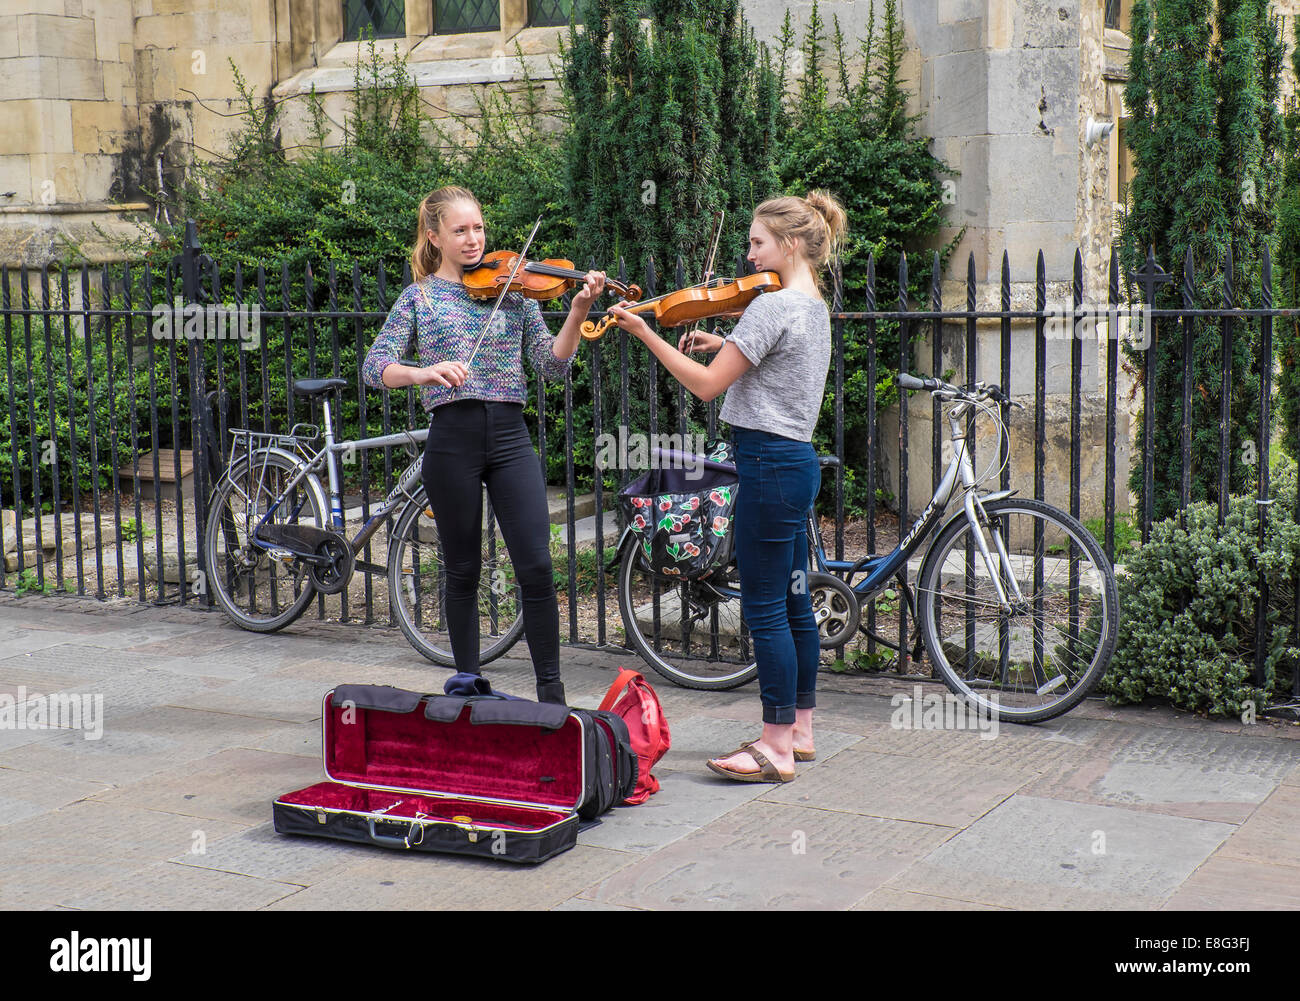 street-busking-duo-on-violins-cambridge-